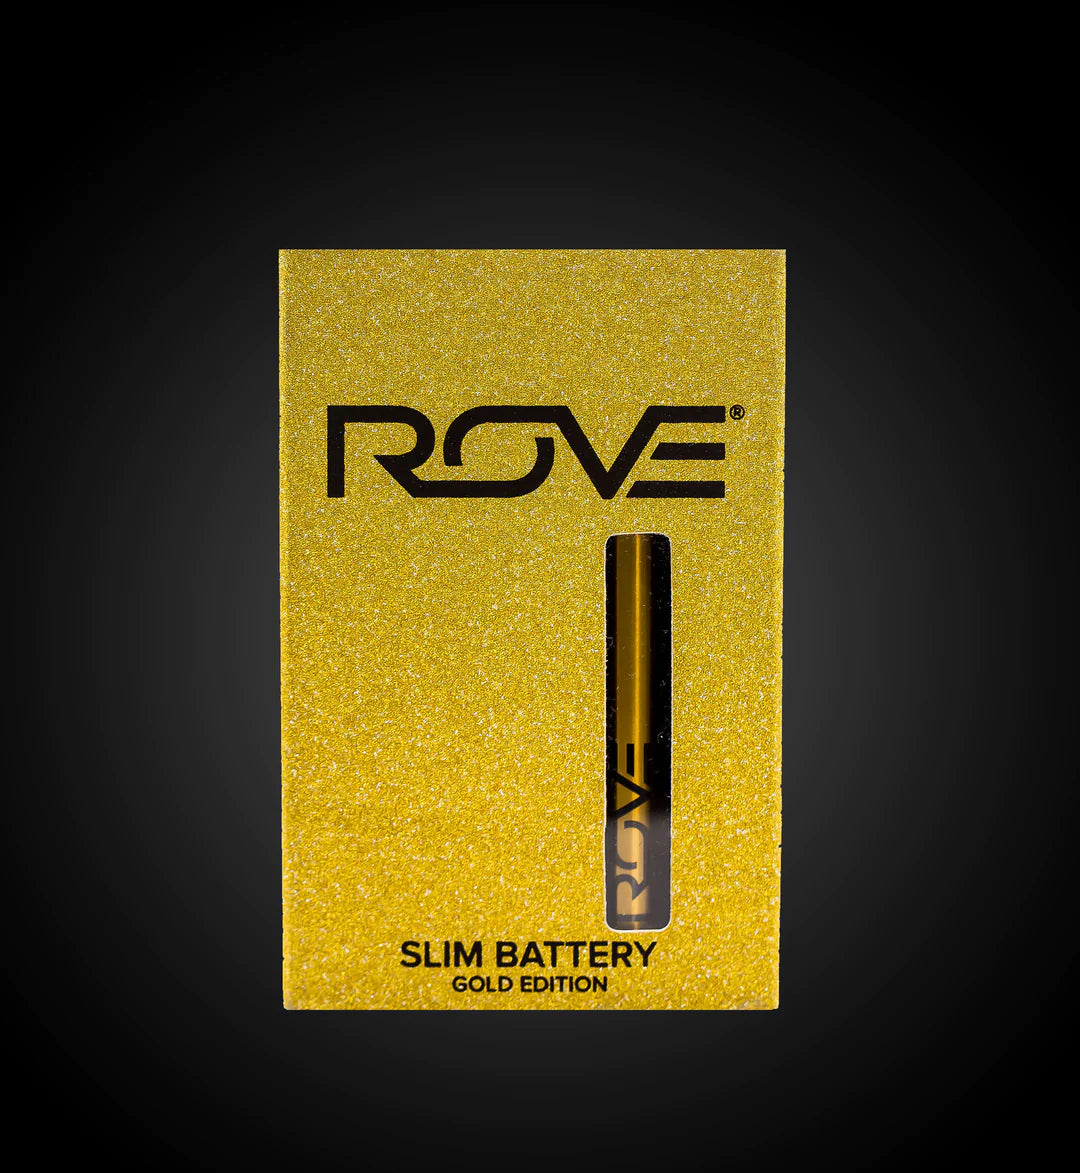 Rove Slim Battery Gold